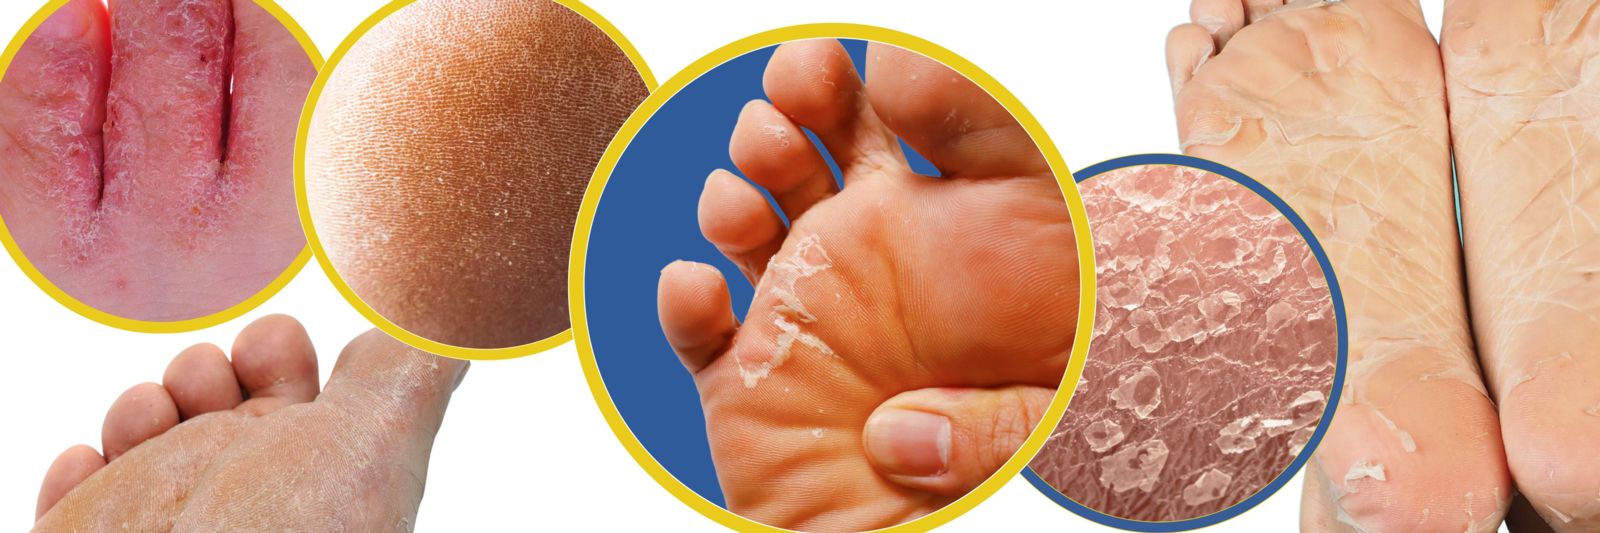 Peeling Feet: Symptoms, Causes, and Treatment